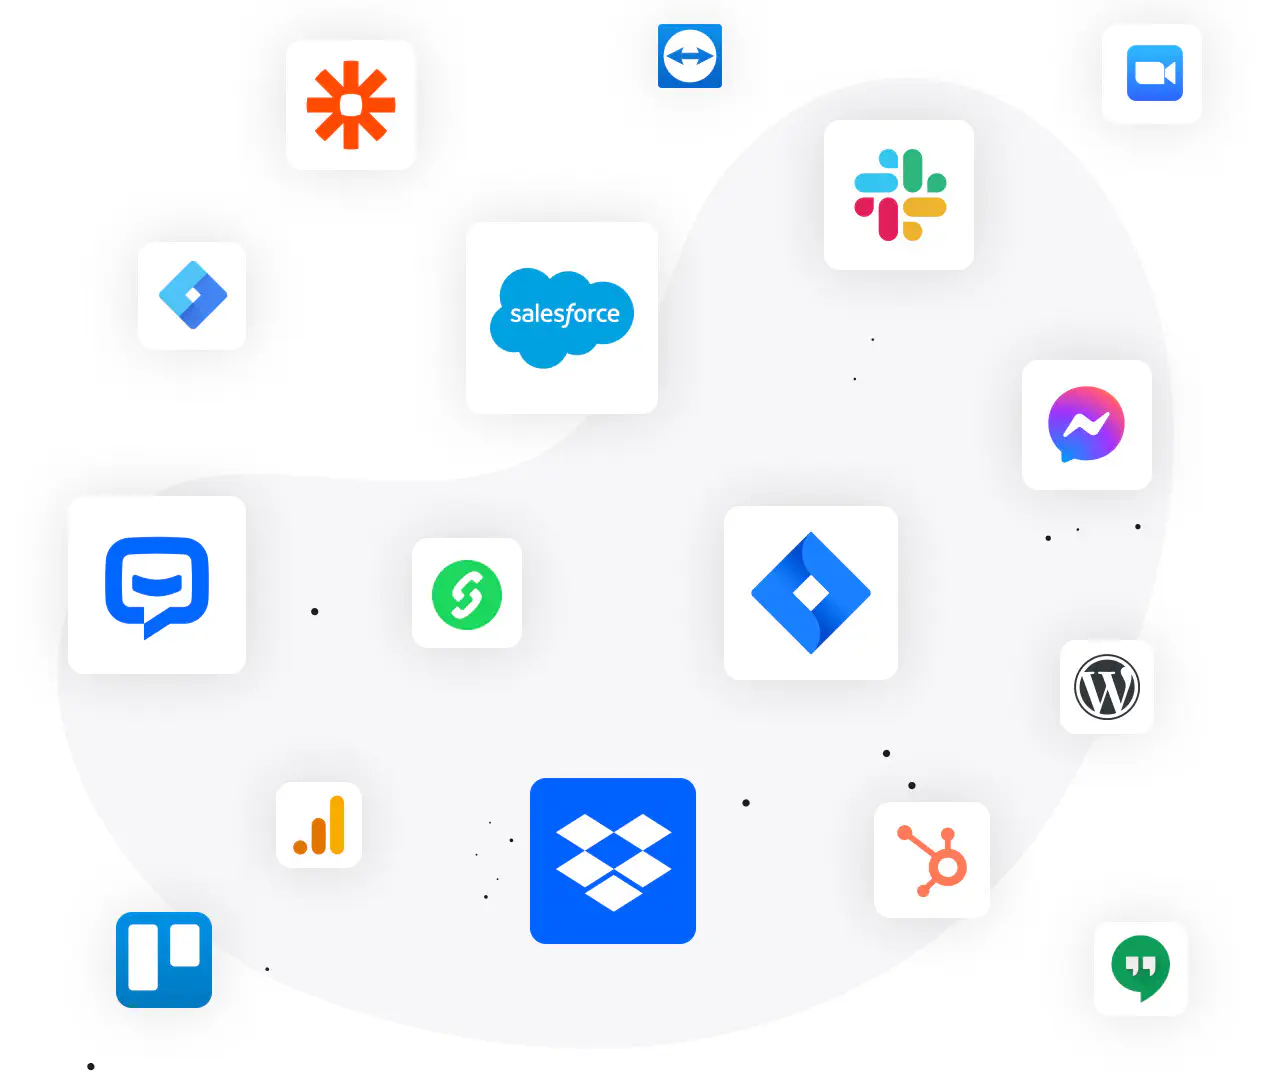 Logos of LiveChat integrations for software companies: ChatBot, Team viewer, Google Hangouts, Facebook, Zapier, Wordpress, Trello, Slack, Dropbox, and more